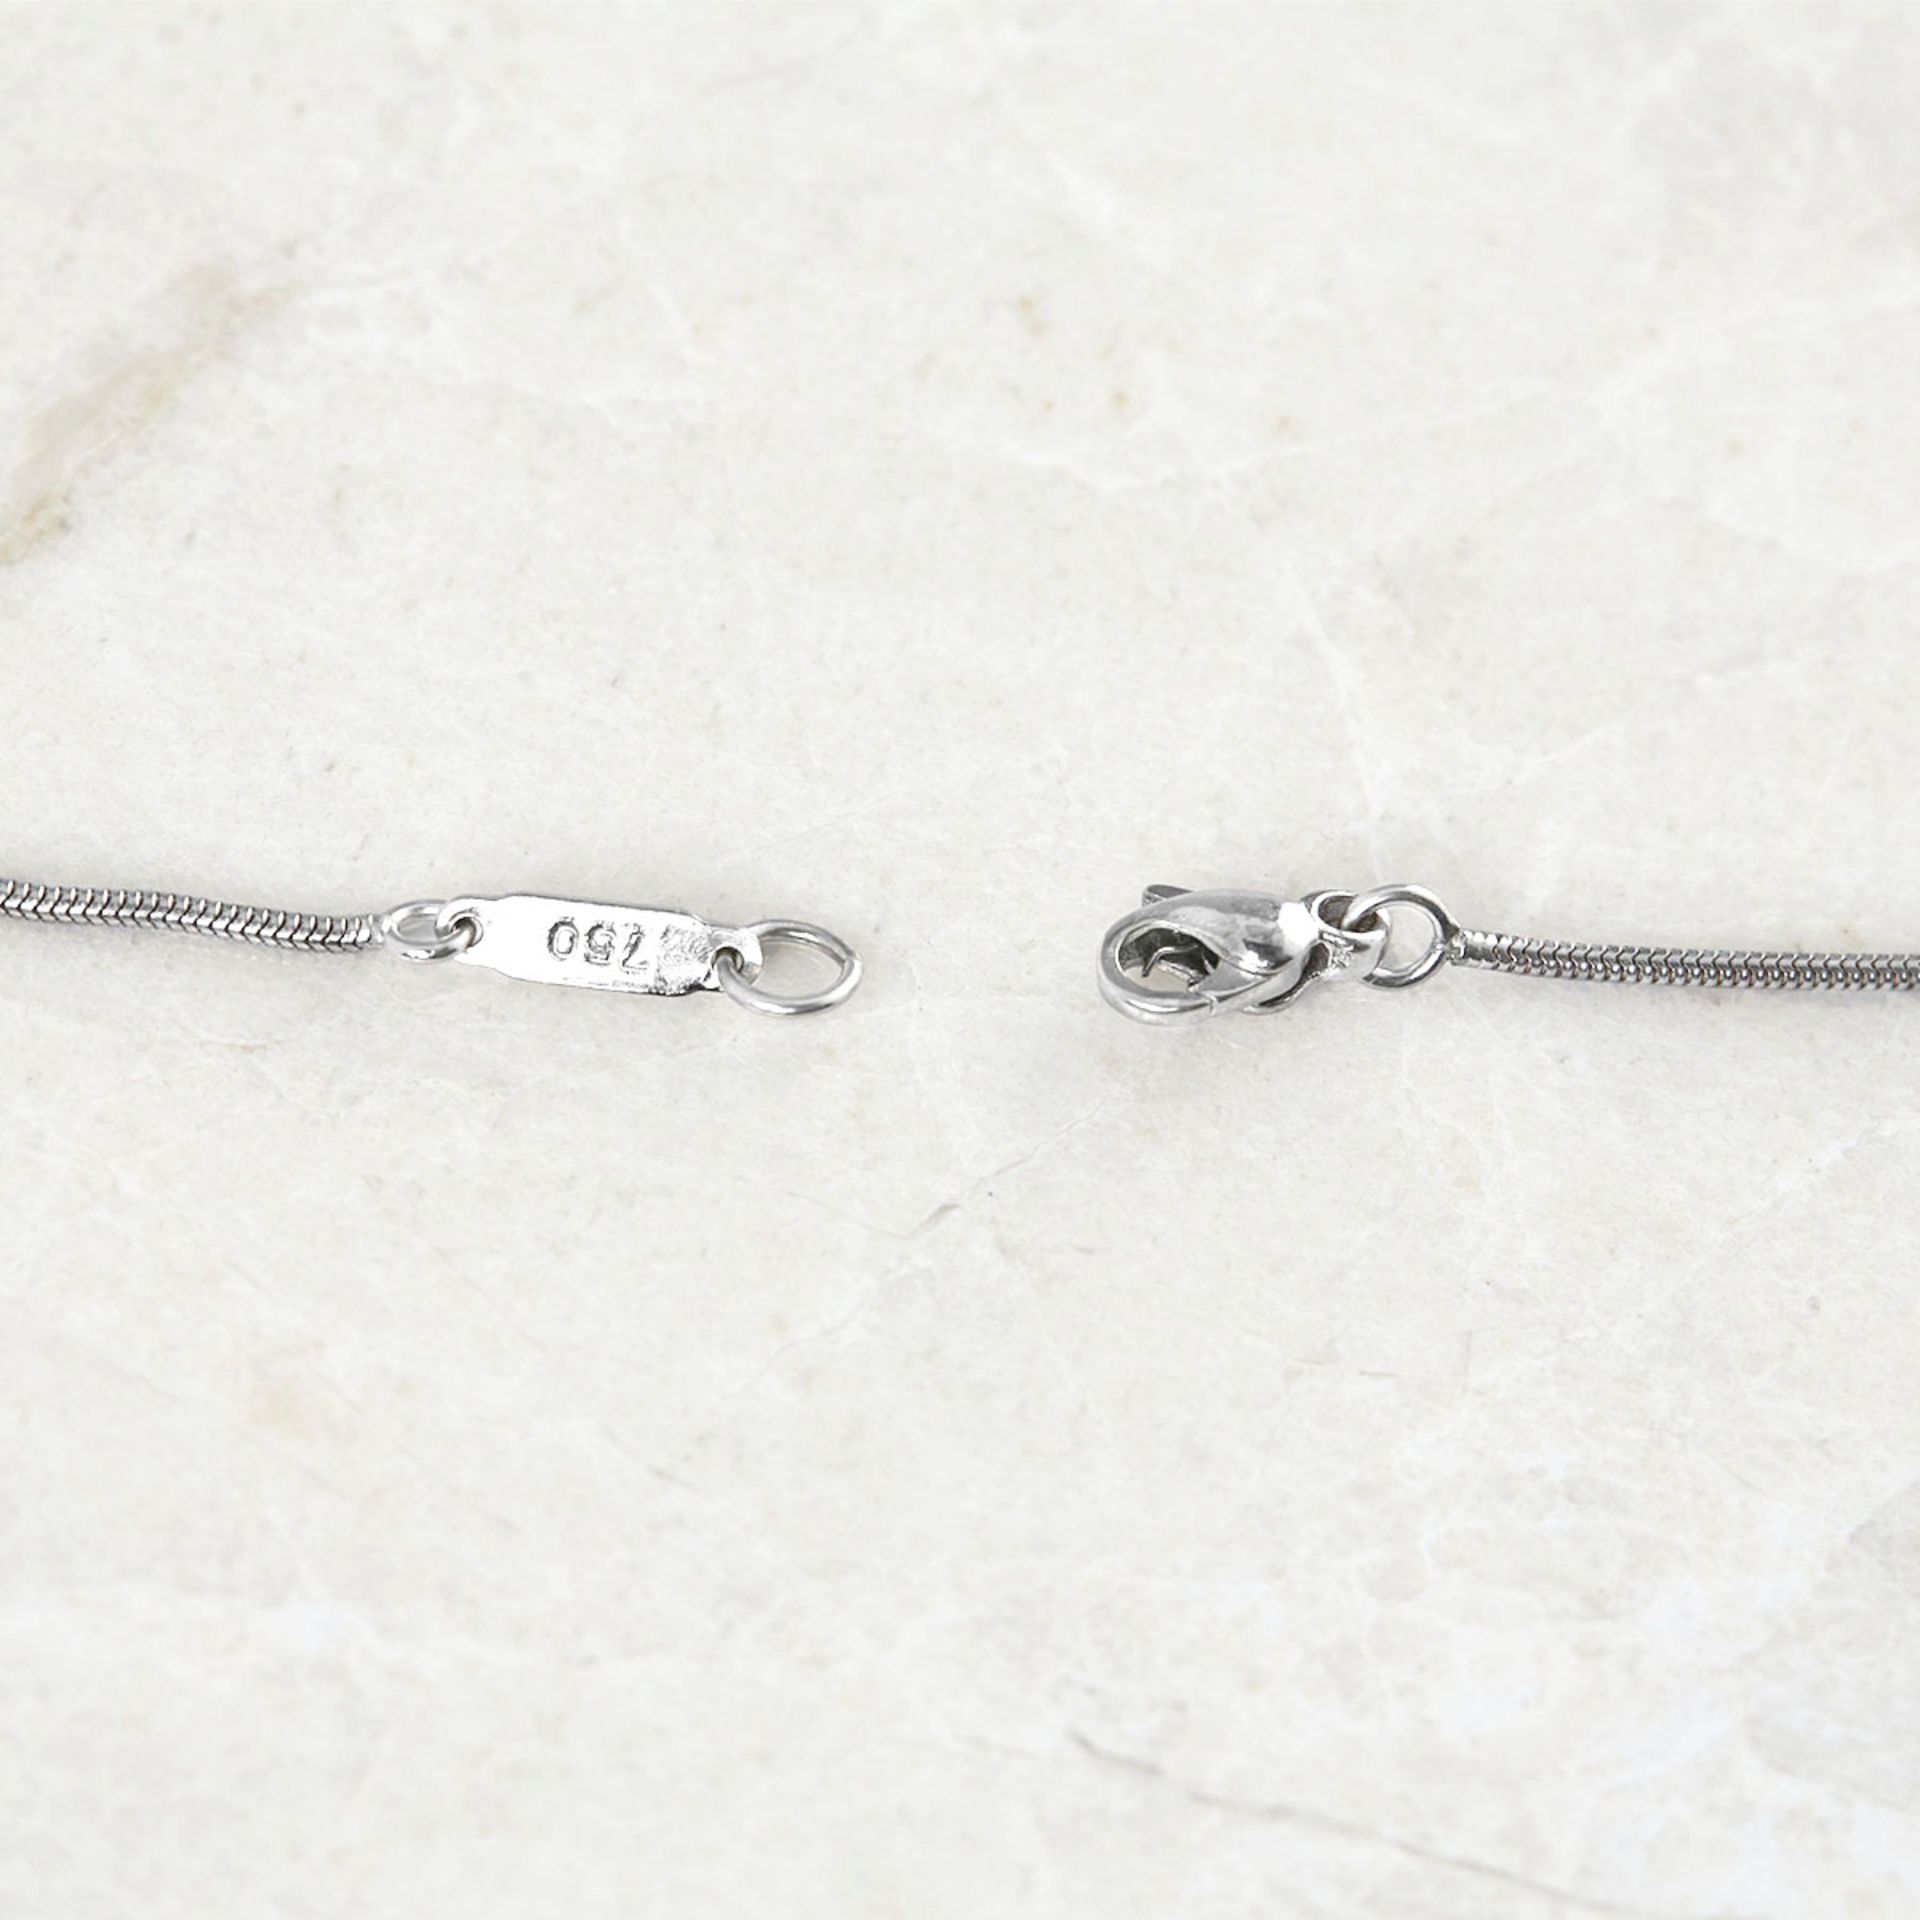 Tiffany & Co. 18k White Gold Diamond Drop Necklace with Box. - Bild 4 aus 6